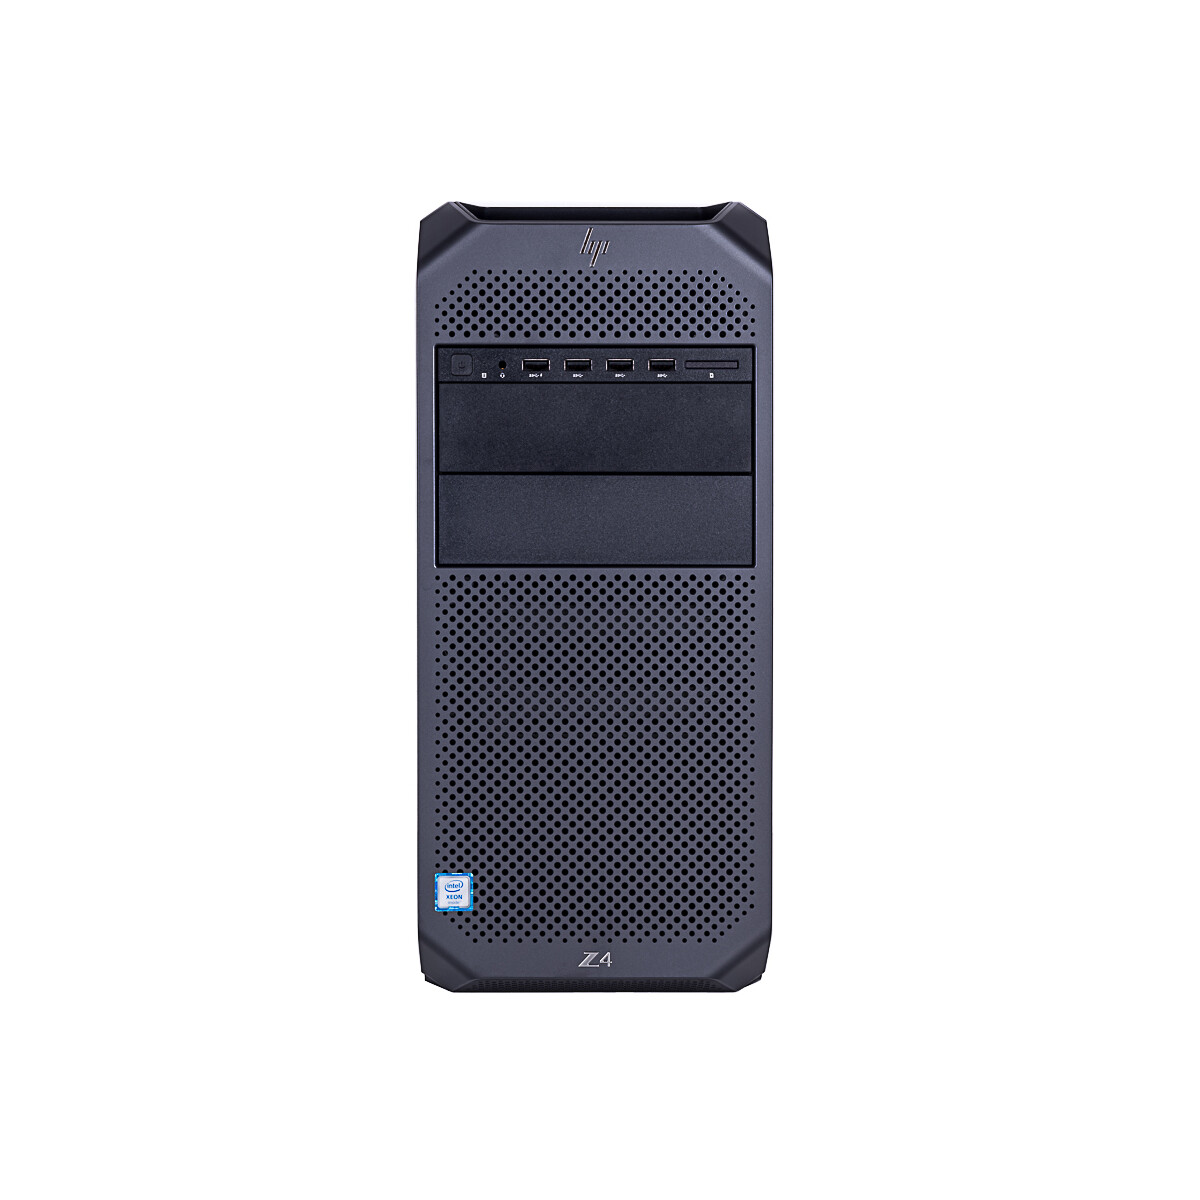 HP Z4 G4 Business Workstation 14-Core Intel Xeon W-2175, max. 4.30GHz, 64GB DDR4, 500GB SSD, NVIDIA Quadro P4000 (8GB), WIN 10 Pro